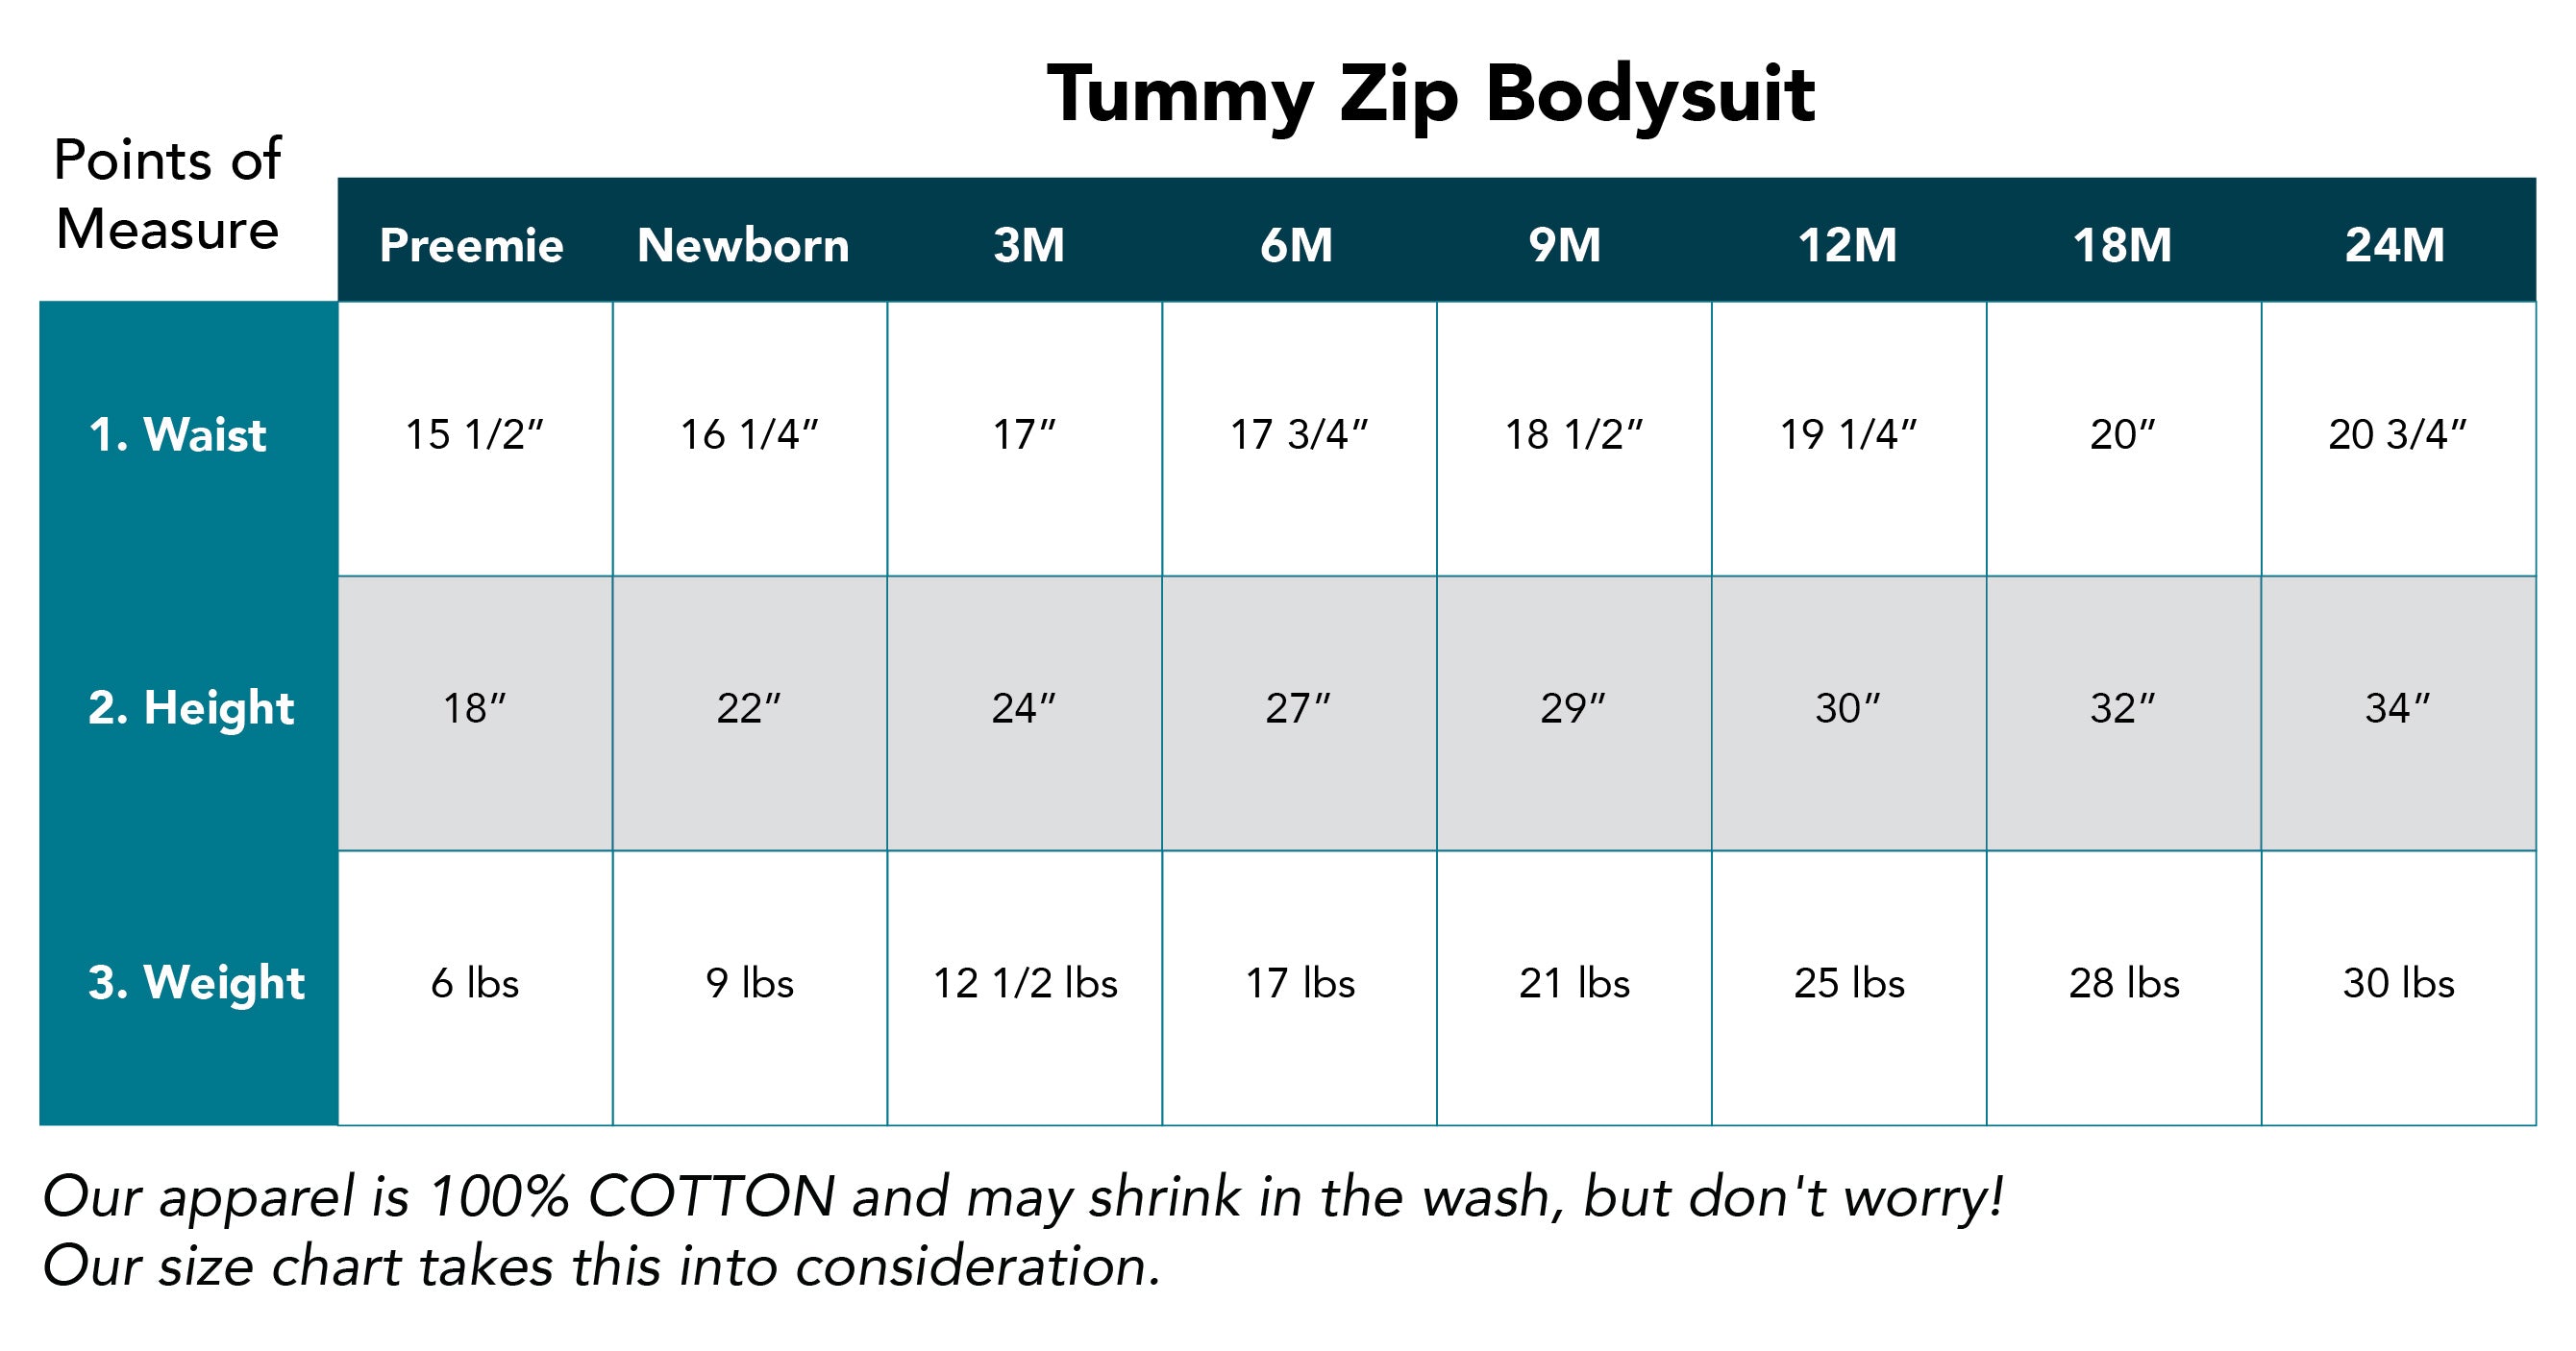 Navy Pelican Long-Sleeve Tummy Zip Bodysuit | Preemie to 24M | G-Tube, Ostomy, Catheter, NICU/PICU, Port-friendly adaptive clothing